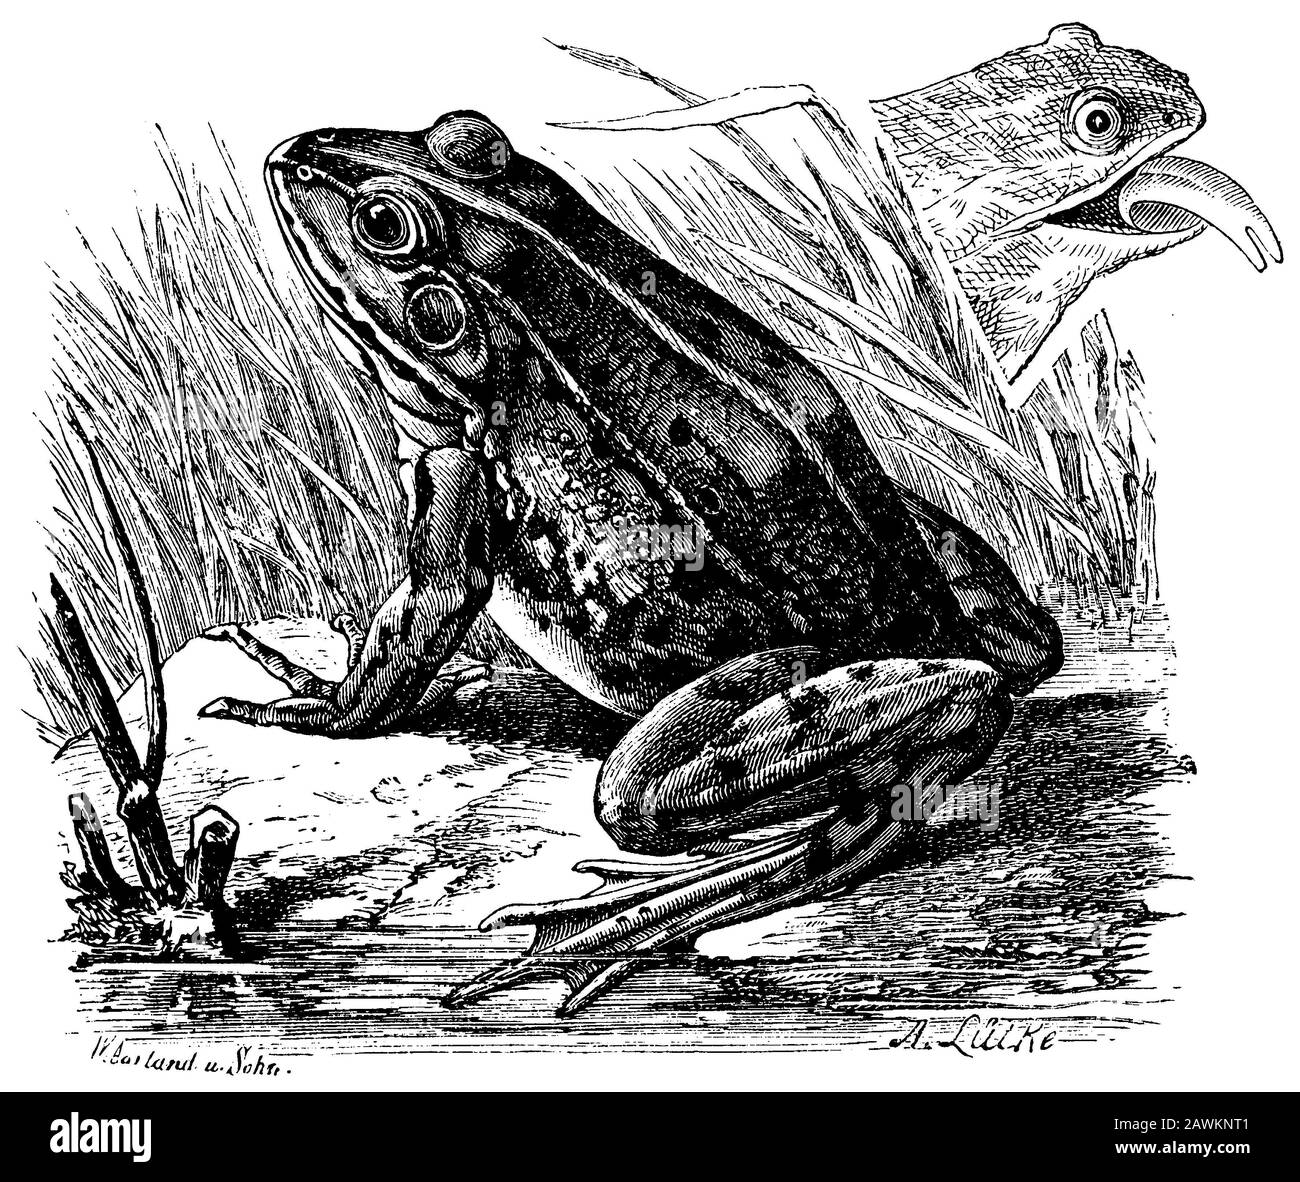 Rana commestibile, Rana esculenta, W. Aarland u. Sohn u. A. Lütke (libro zoologico, 1894) Foto Stock